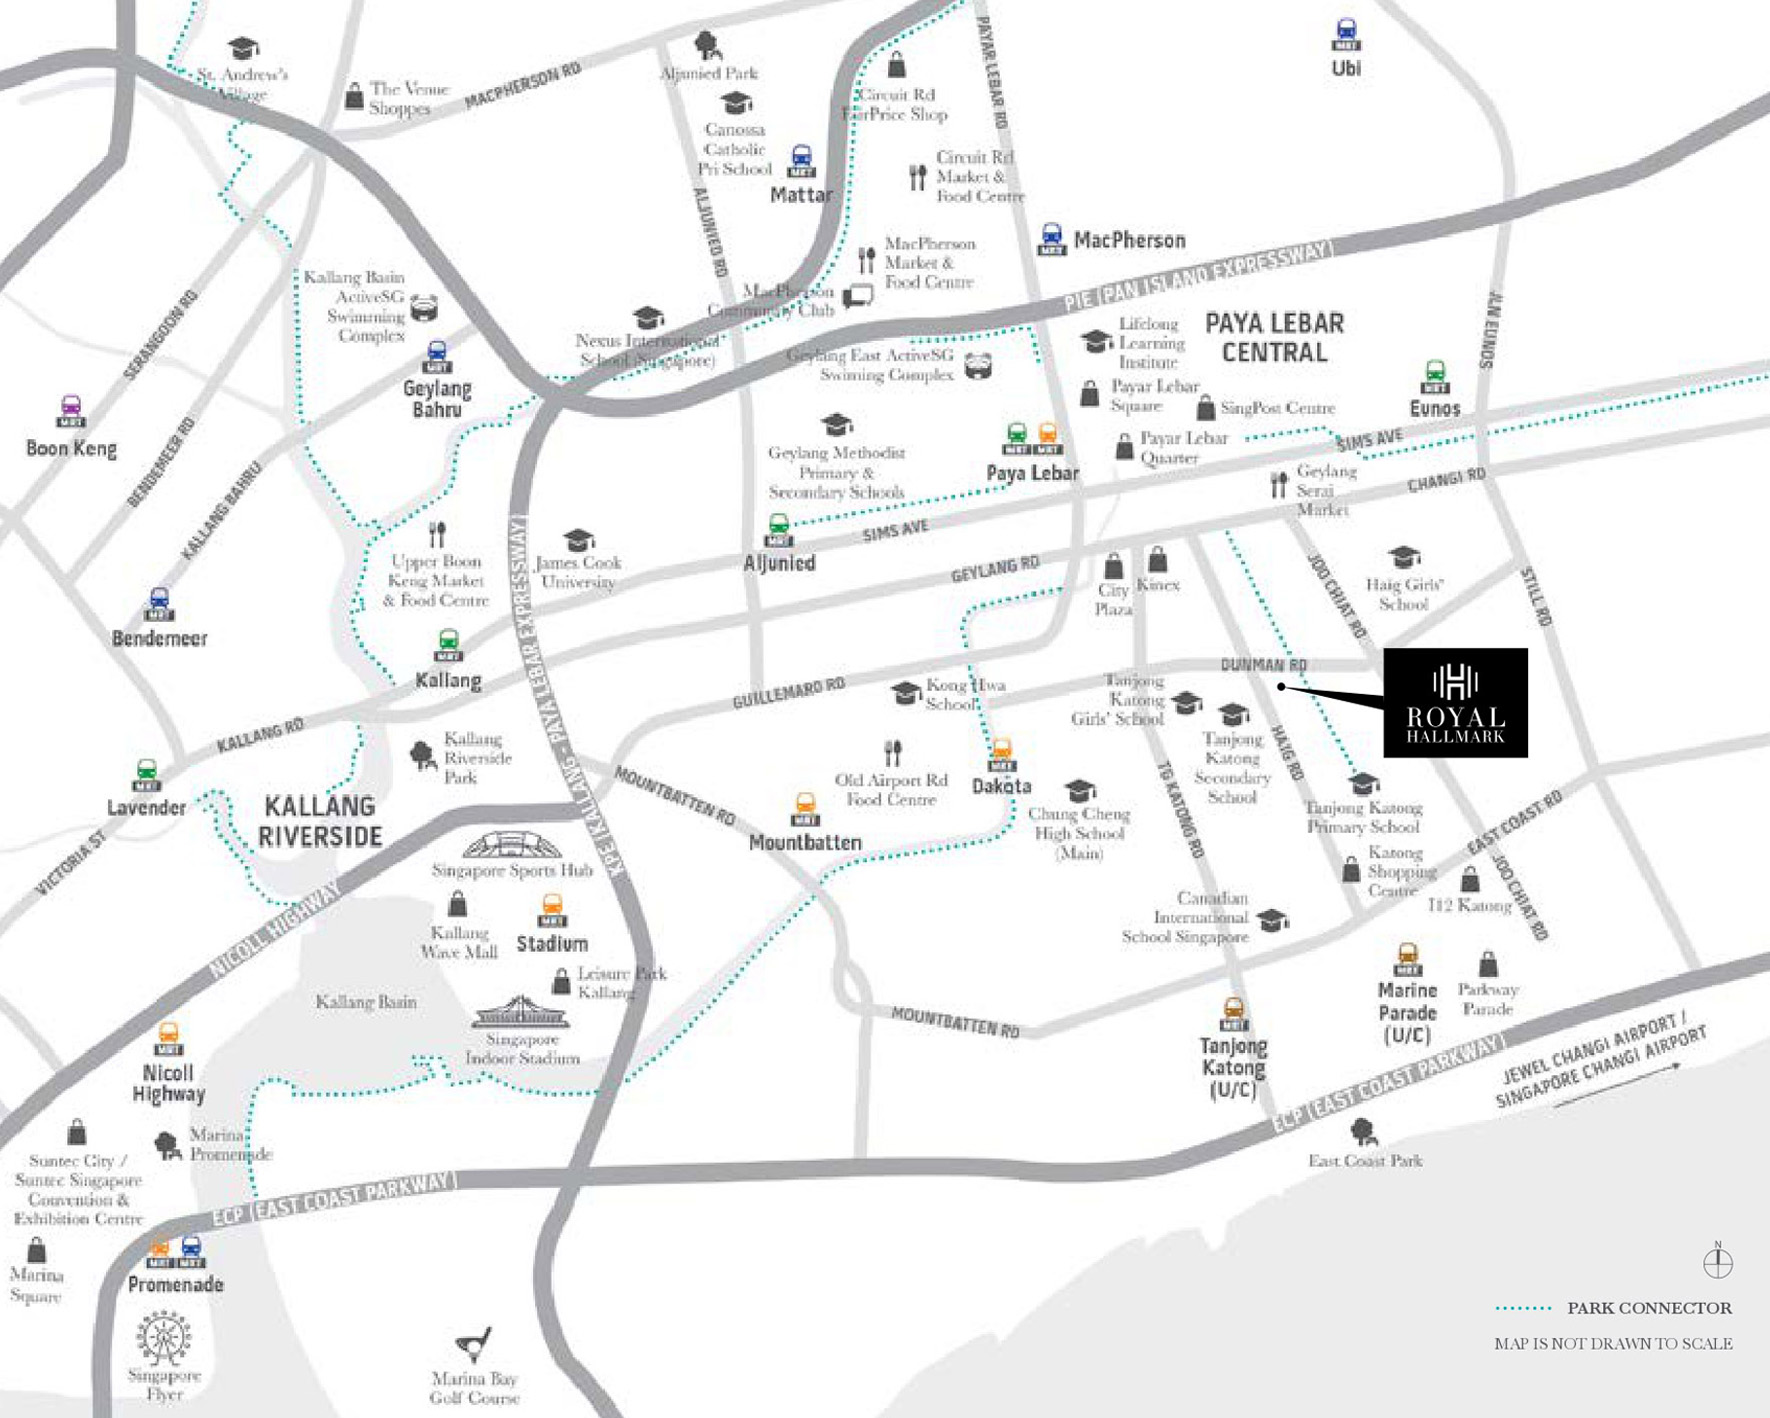 royal-hallmark-location-map